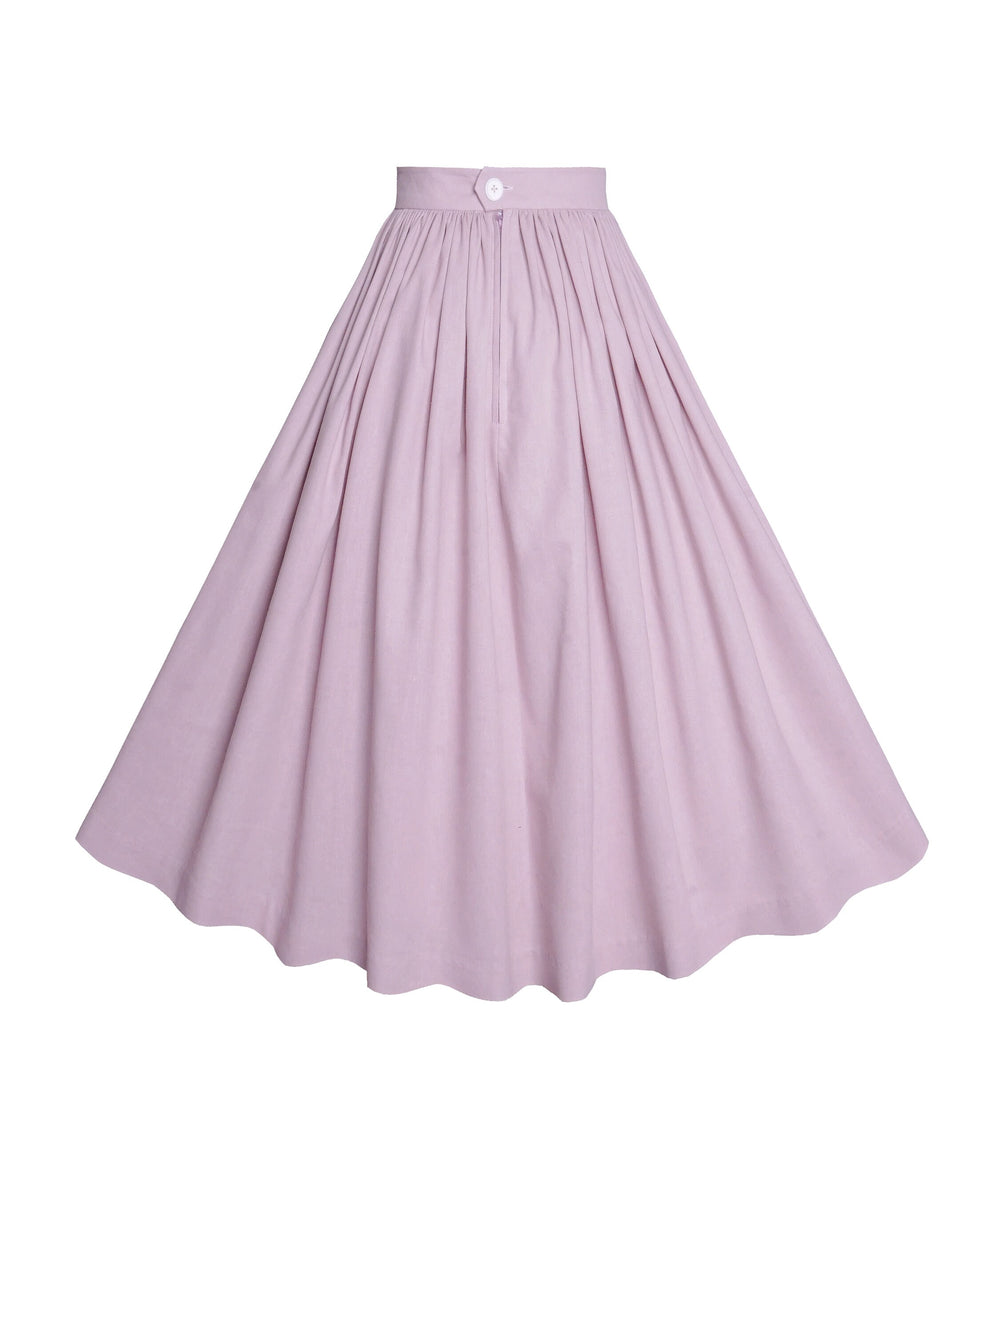 MTO - Lola Skirt in Lilac Purple Linen